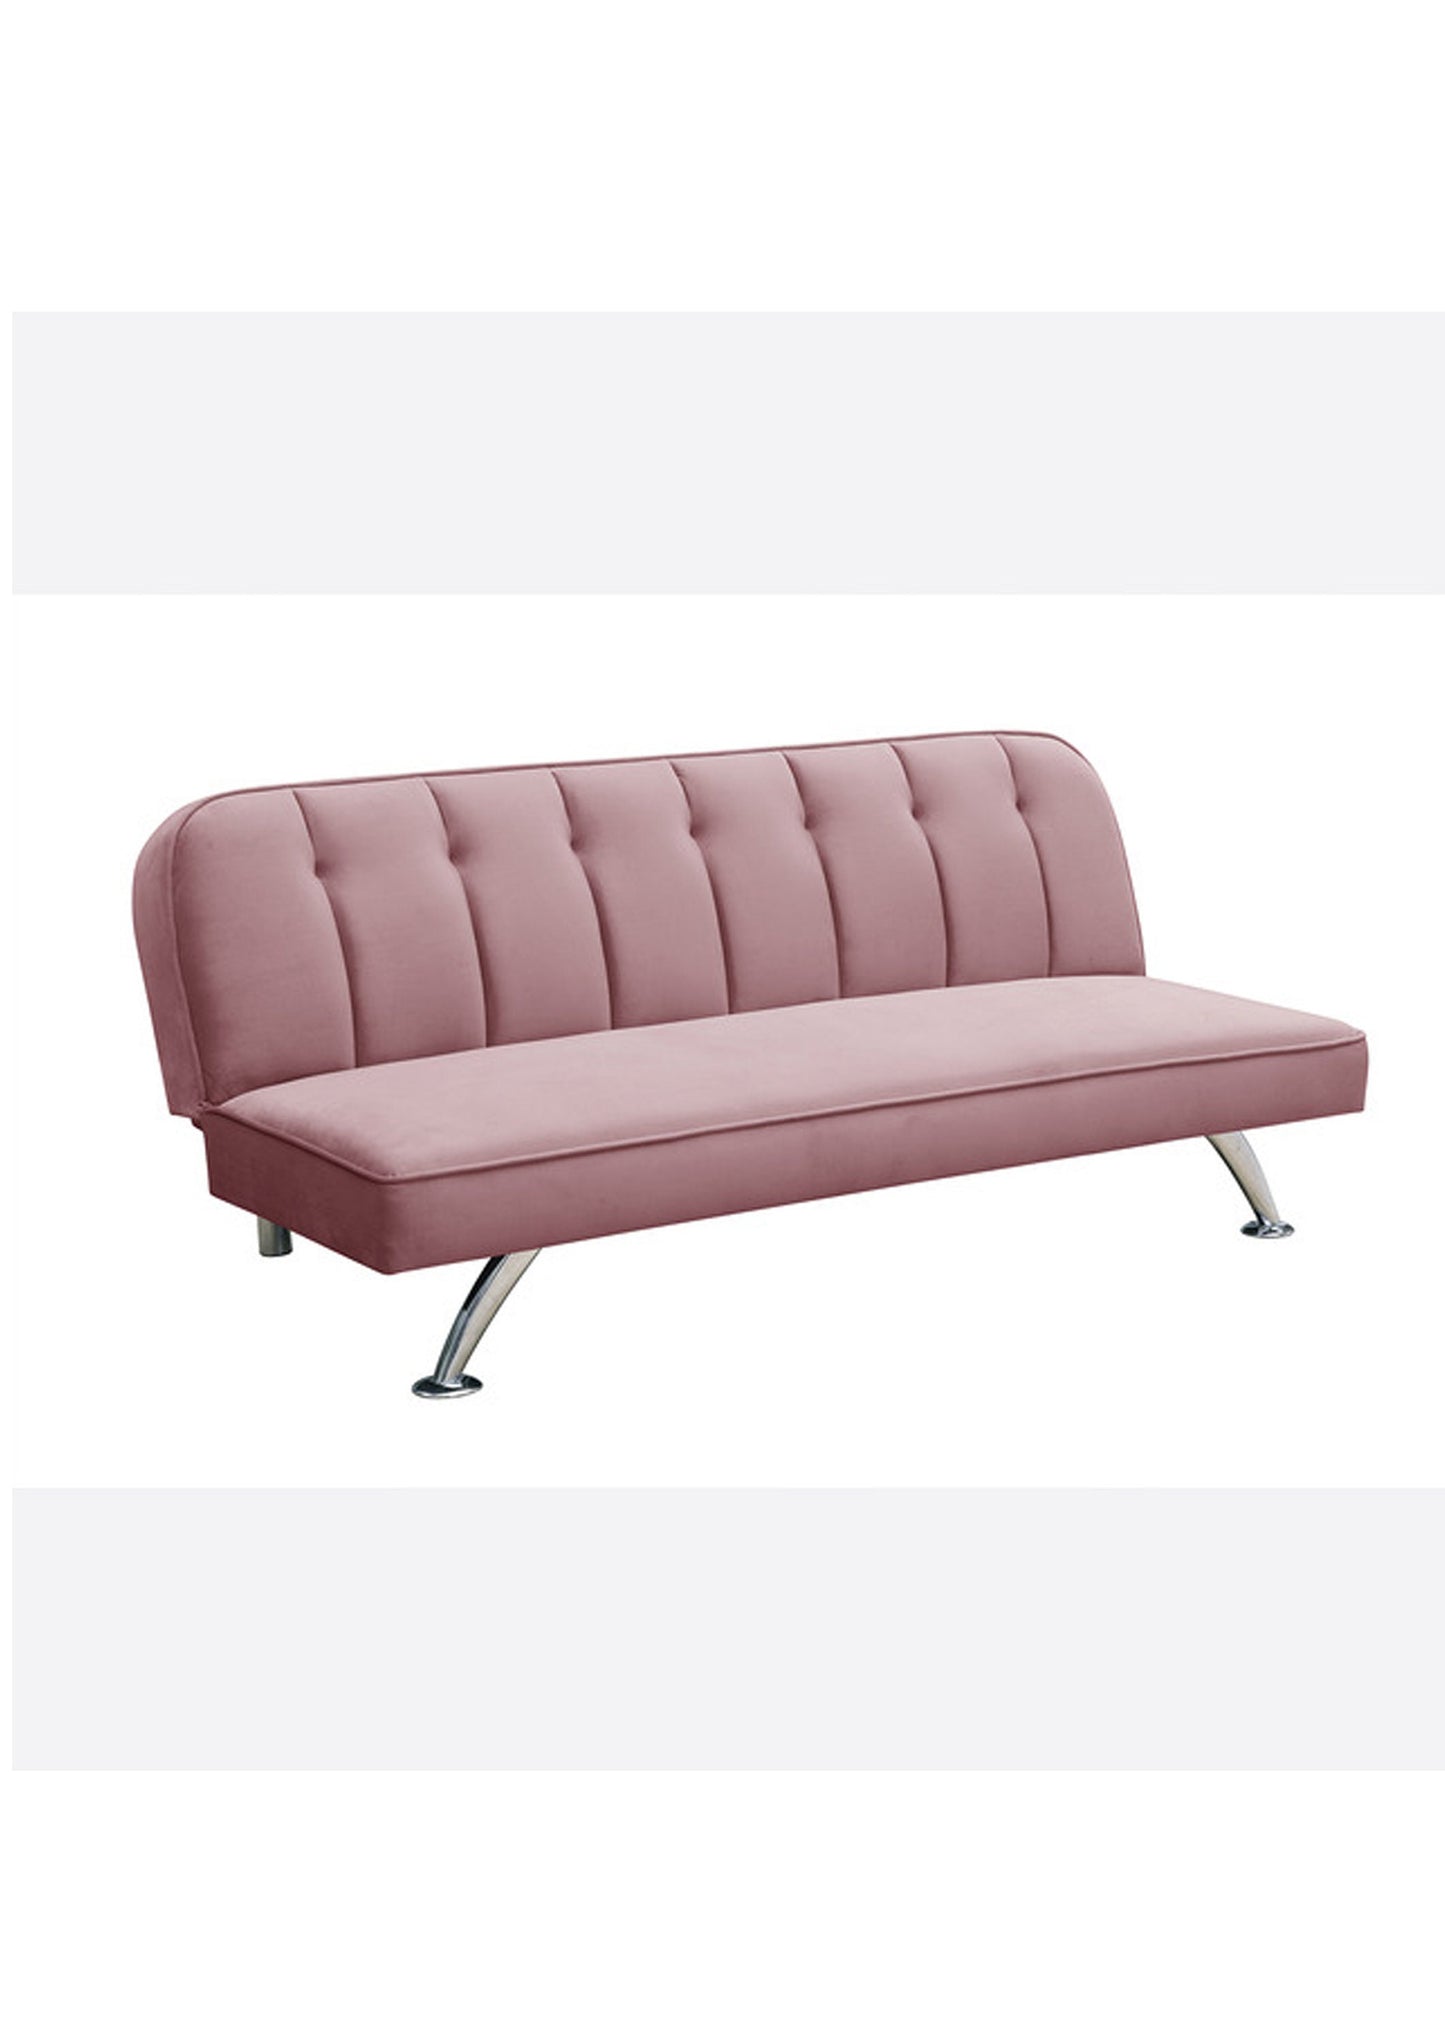 Beautiful, modern, scandi , retro Velvet Sofa bed - choose from Green, Grey, Pink, Orange